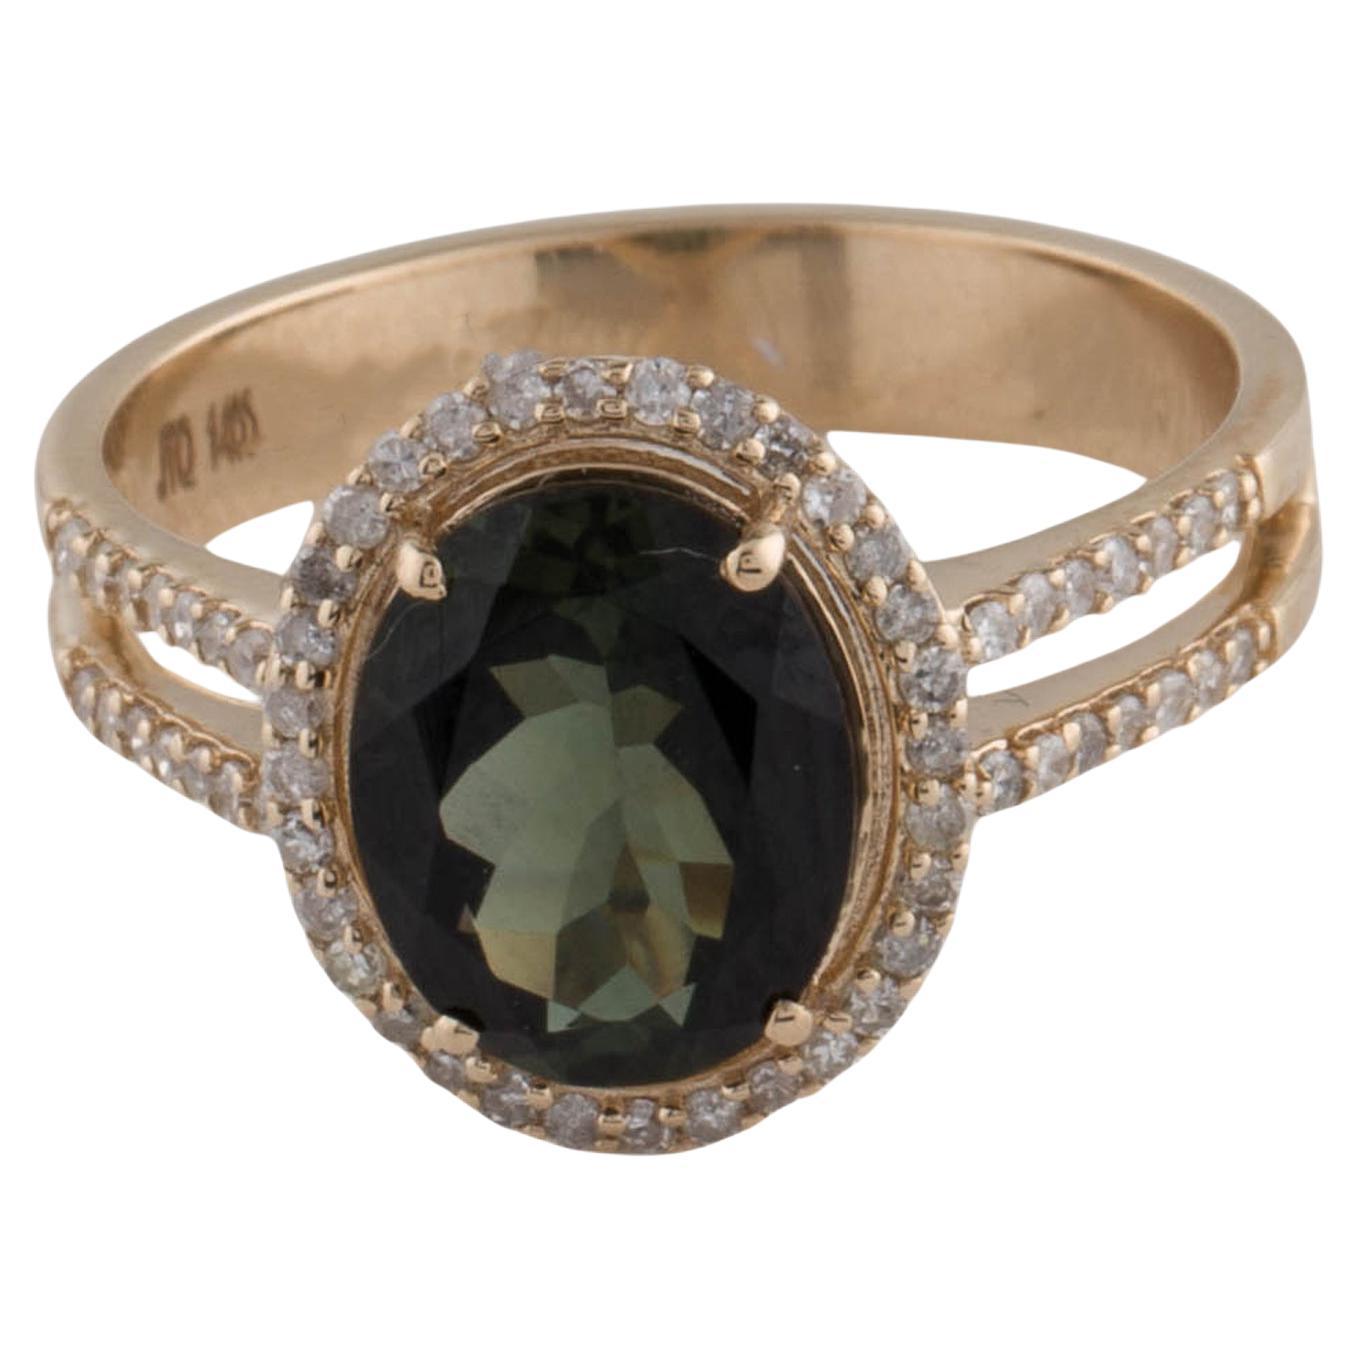 Elegant 14K Gold 2.61ctw Tourmaline & Diamond Cocktail Ring - Size 8 - Jewelry